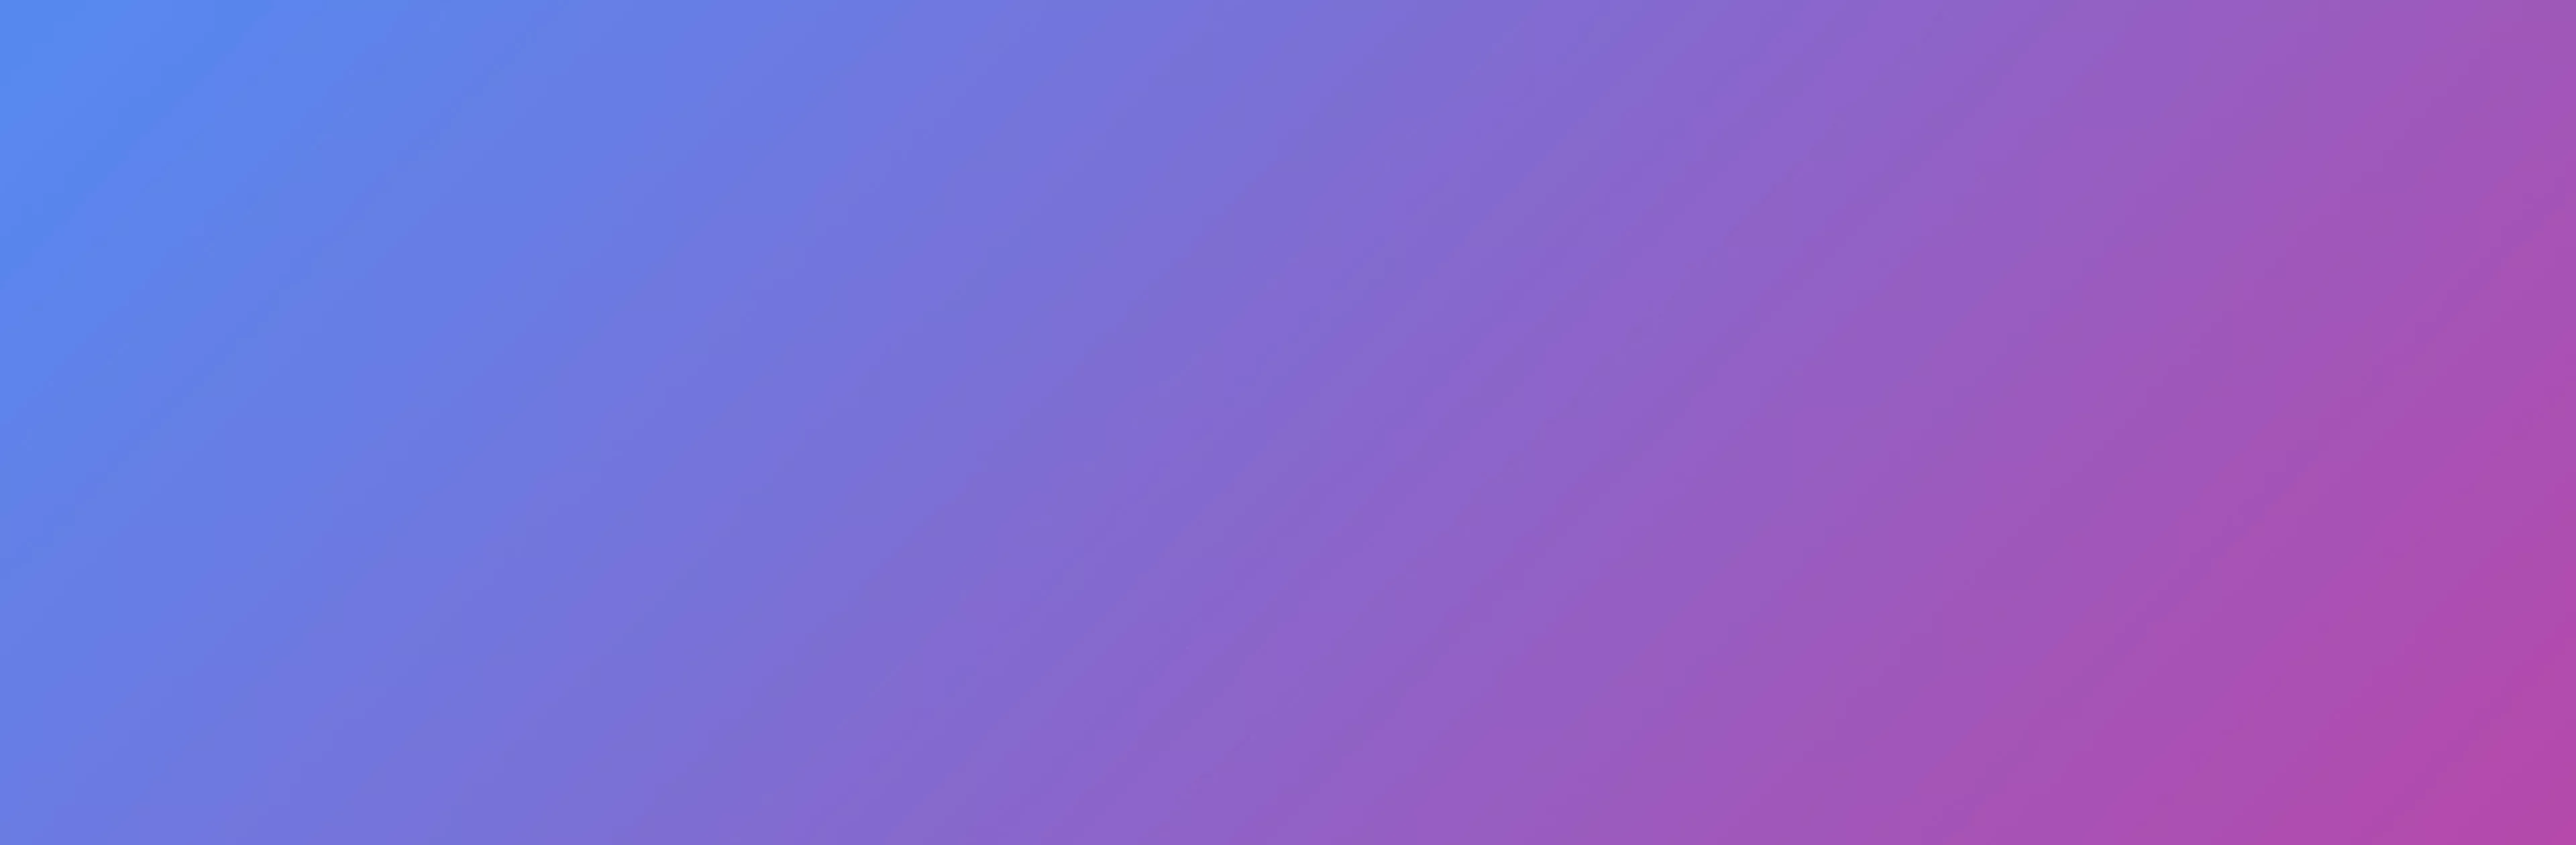 Blue pink gradient